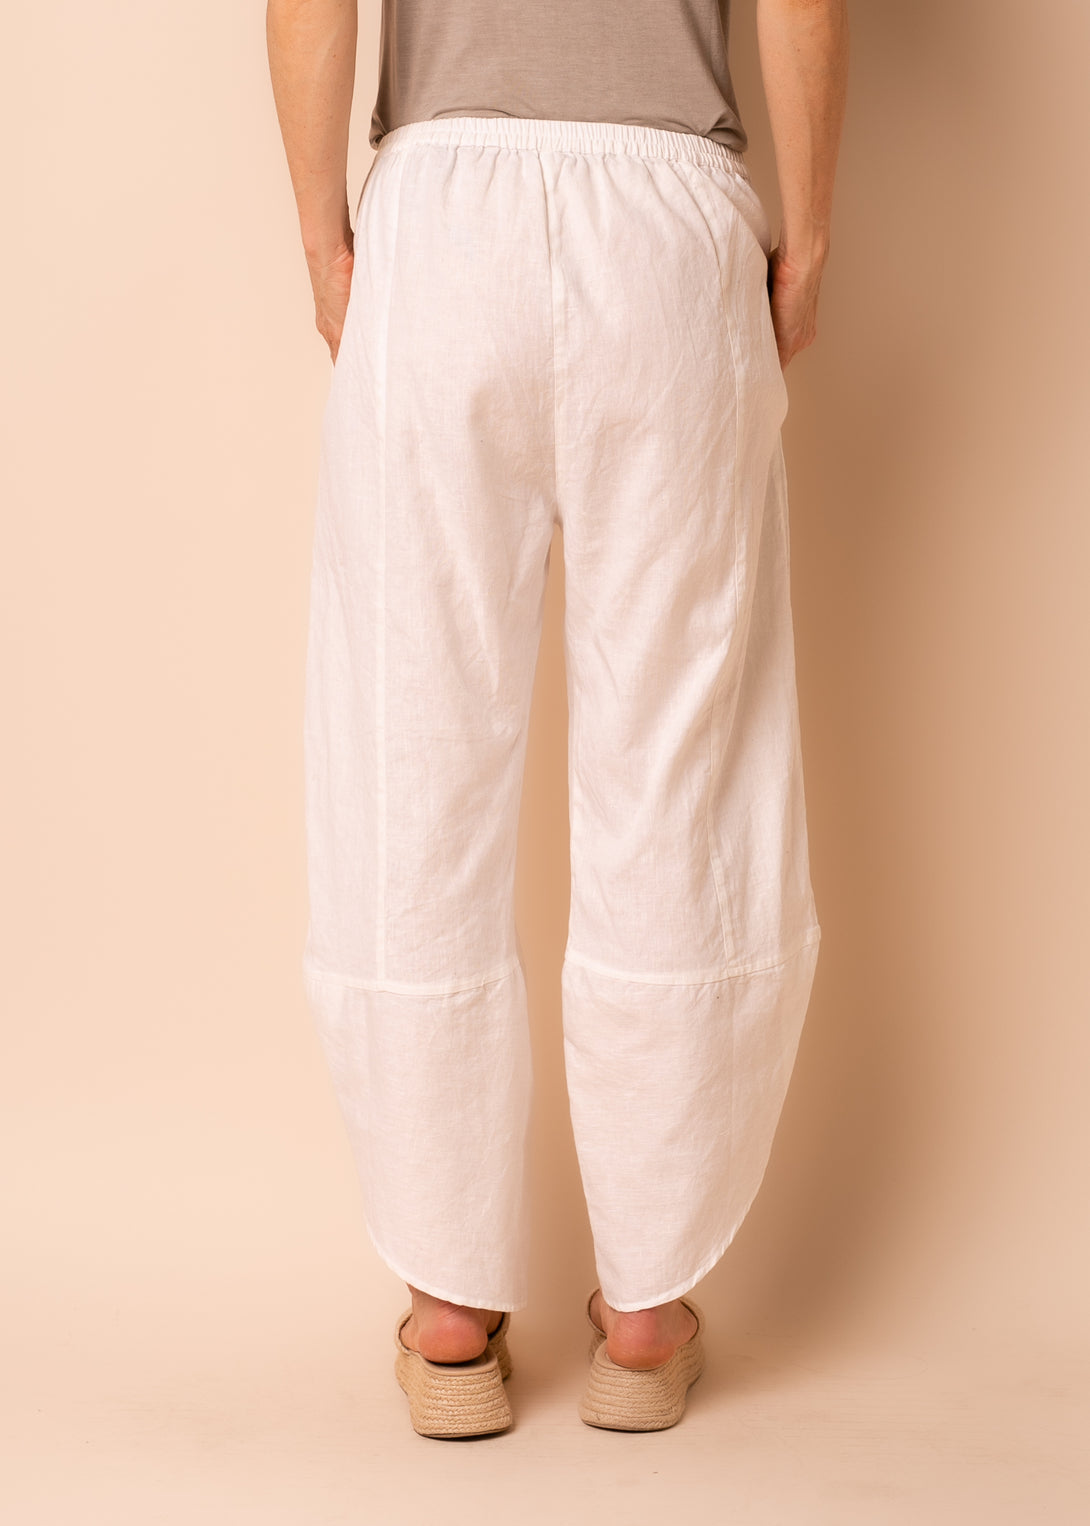 Rowen Linen Blend Pants in Cream - Imagine Fashion